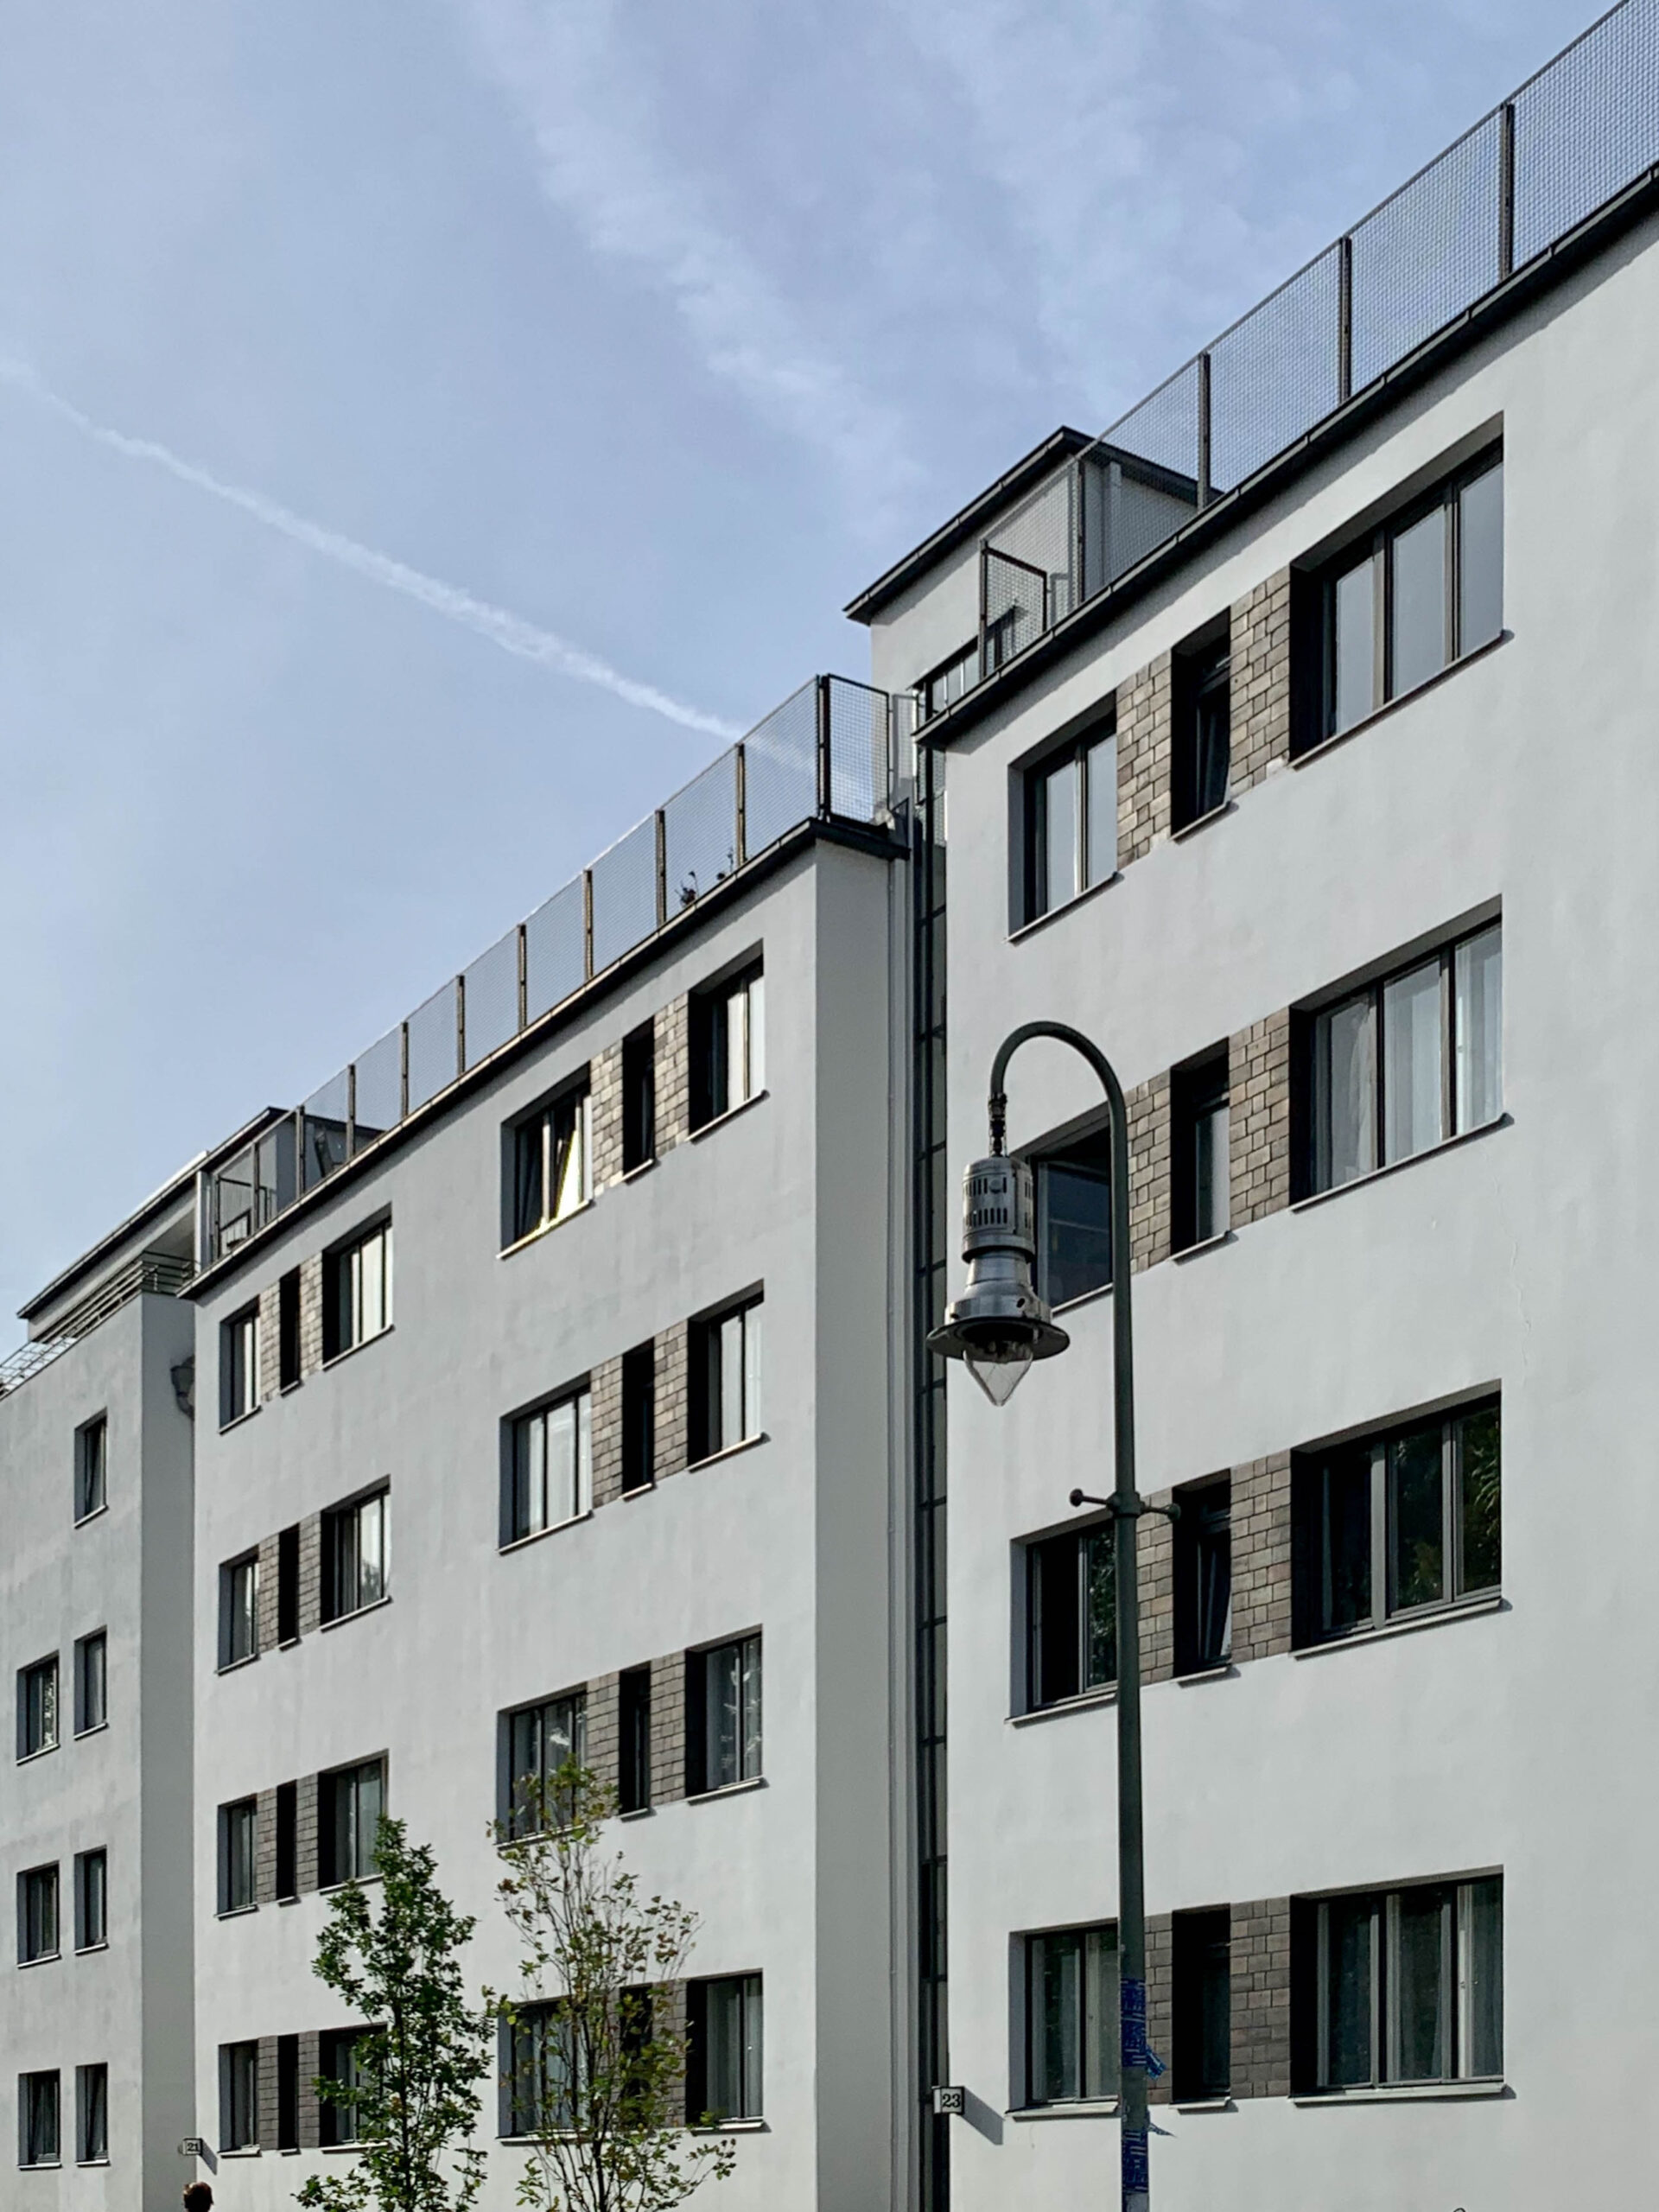 Residential complex, Siemensstadt, 1929-1931. Architect: Walter Gropius